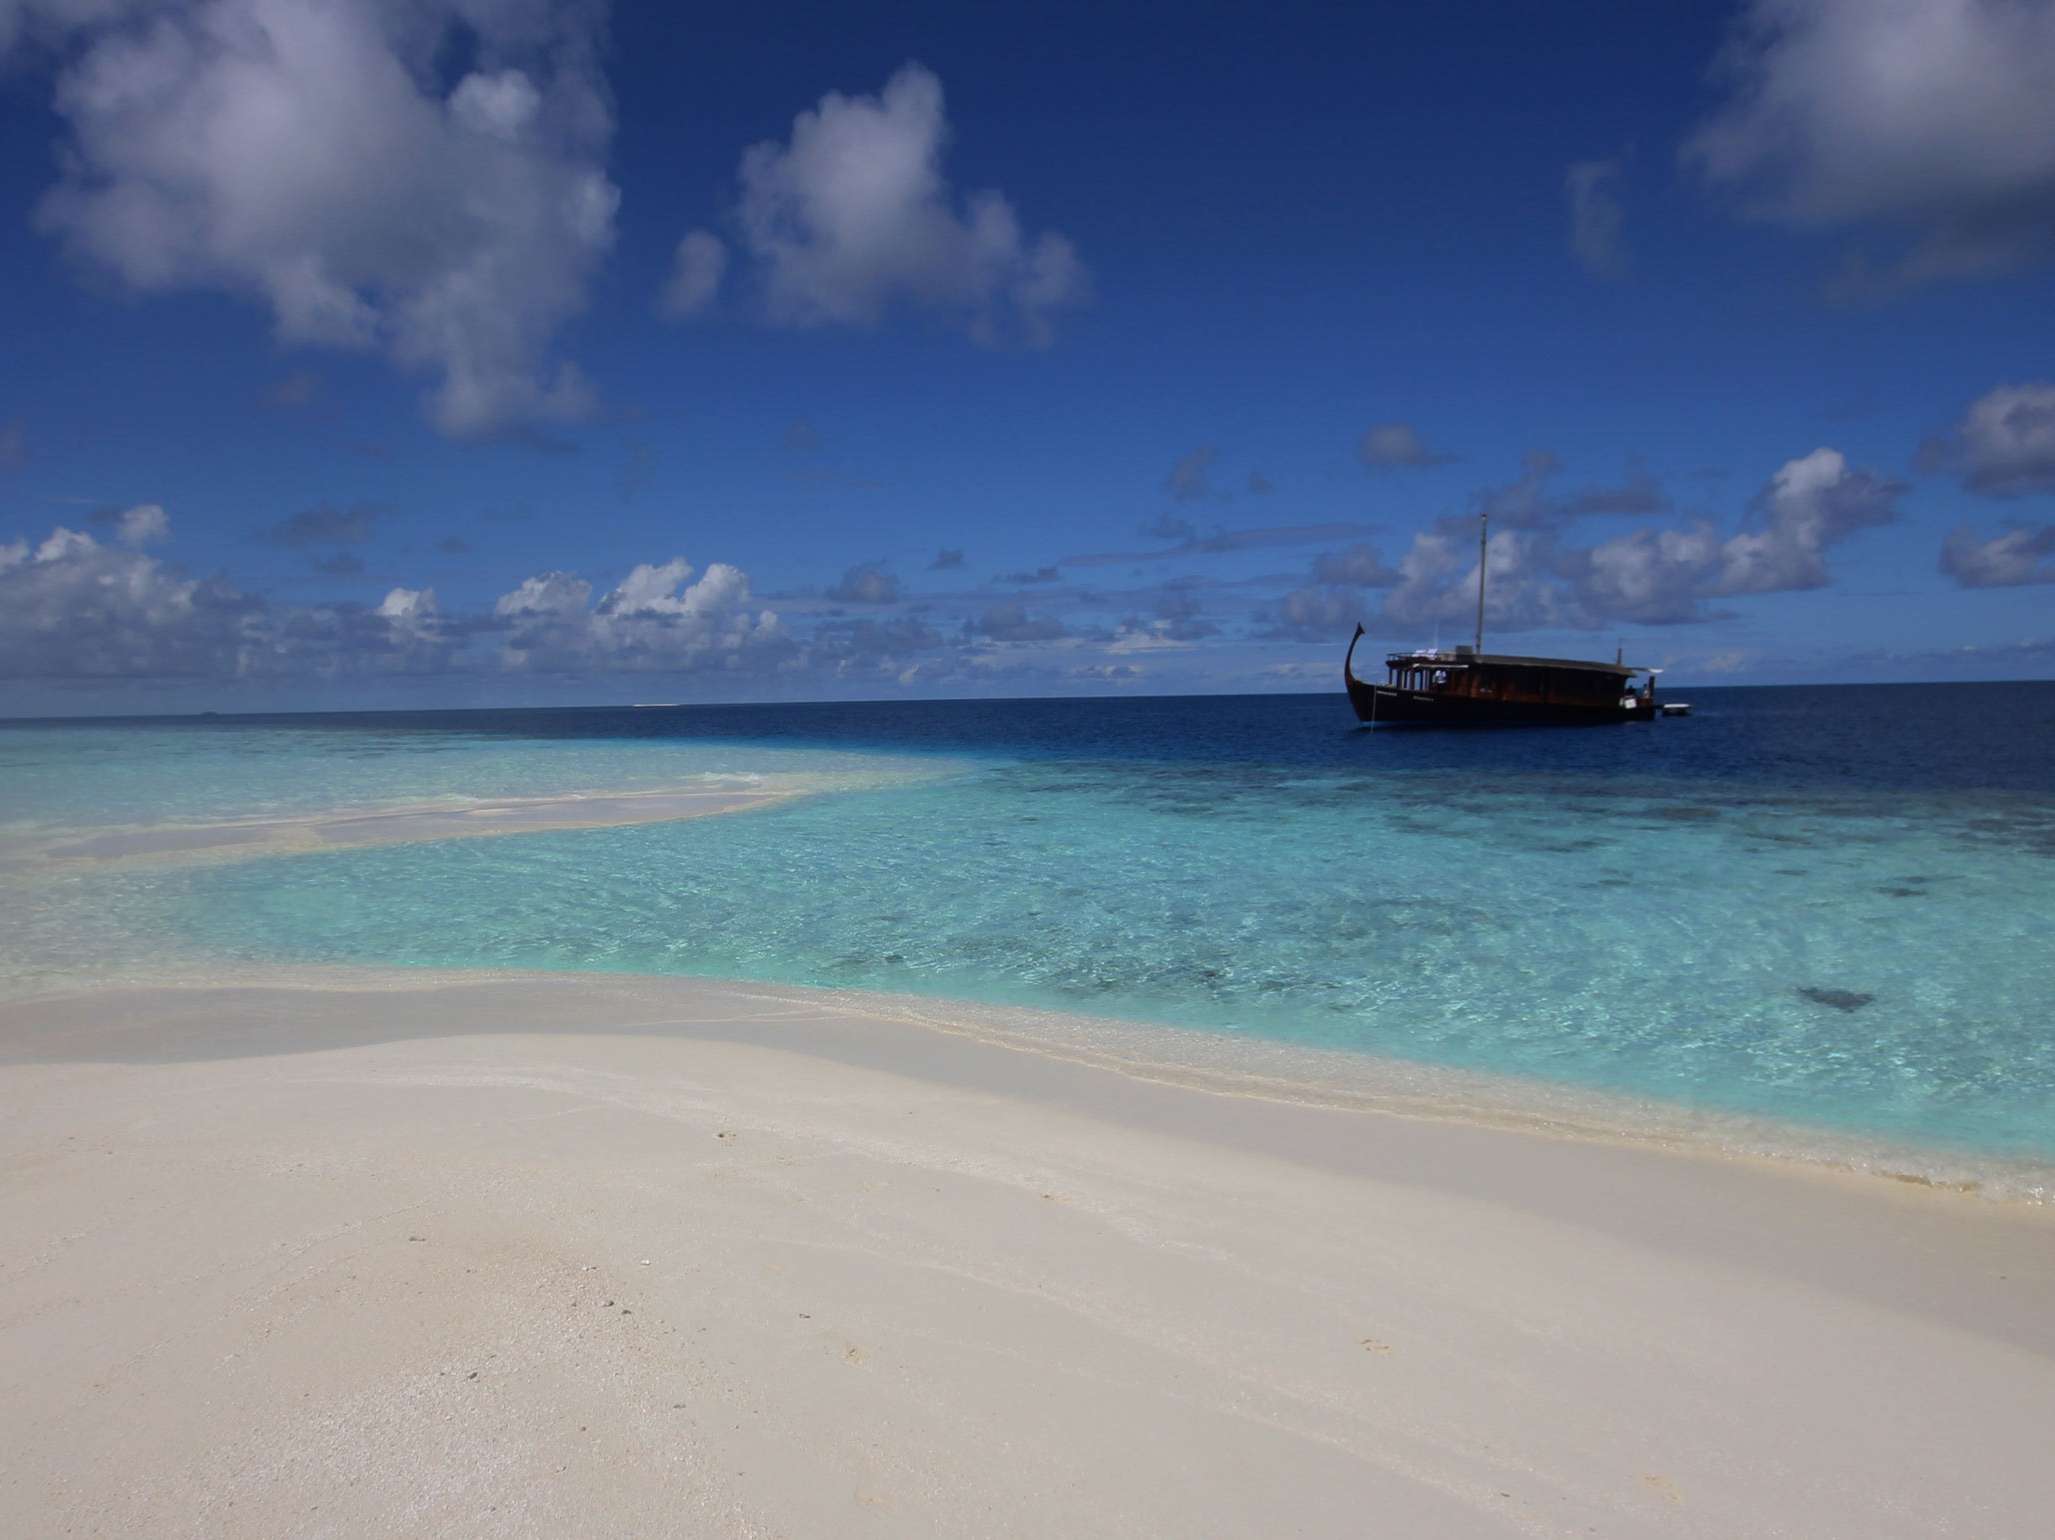 DHONI STELLA 1 - Motor Boat Charter Seychelles & Boat hire in Indian Ocean & SE Asia 5